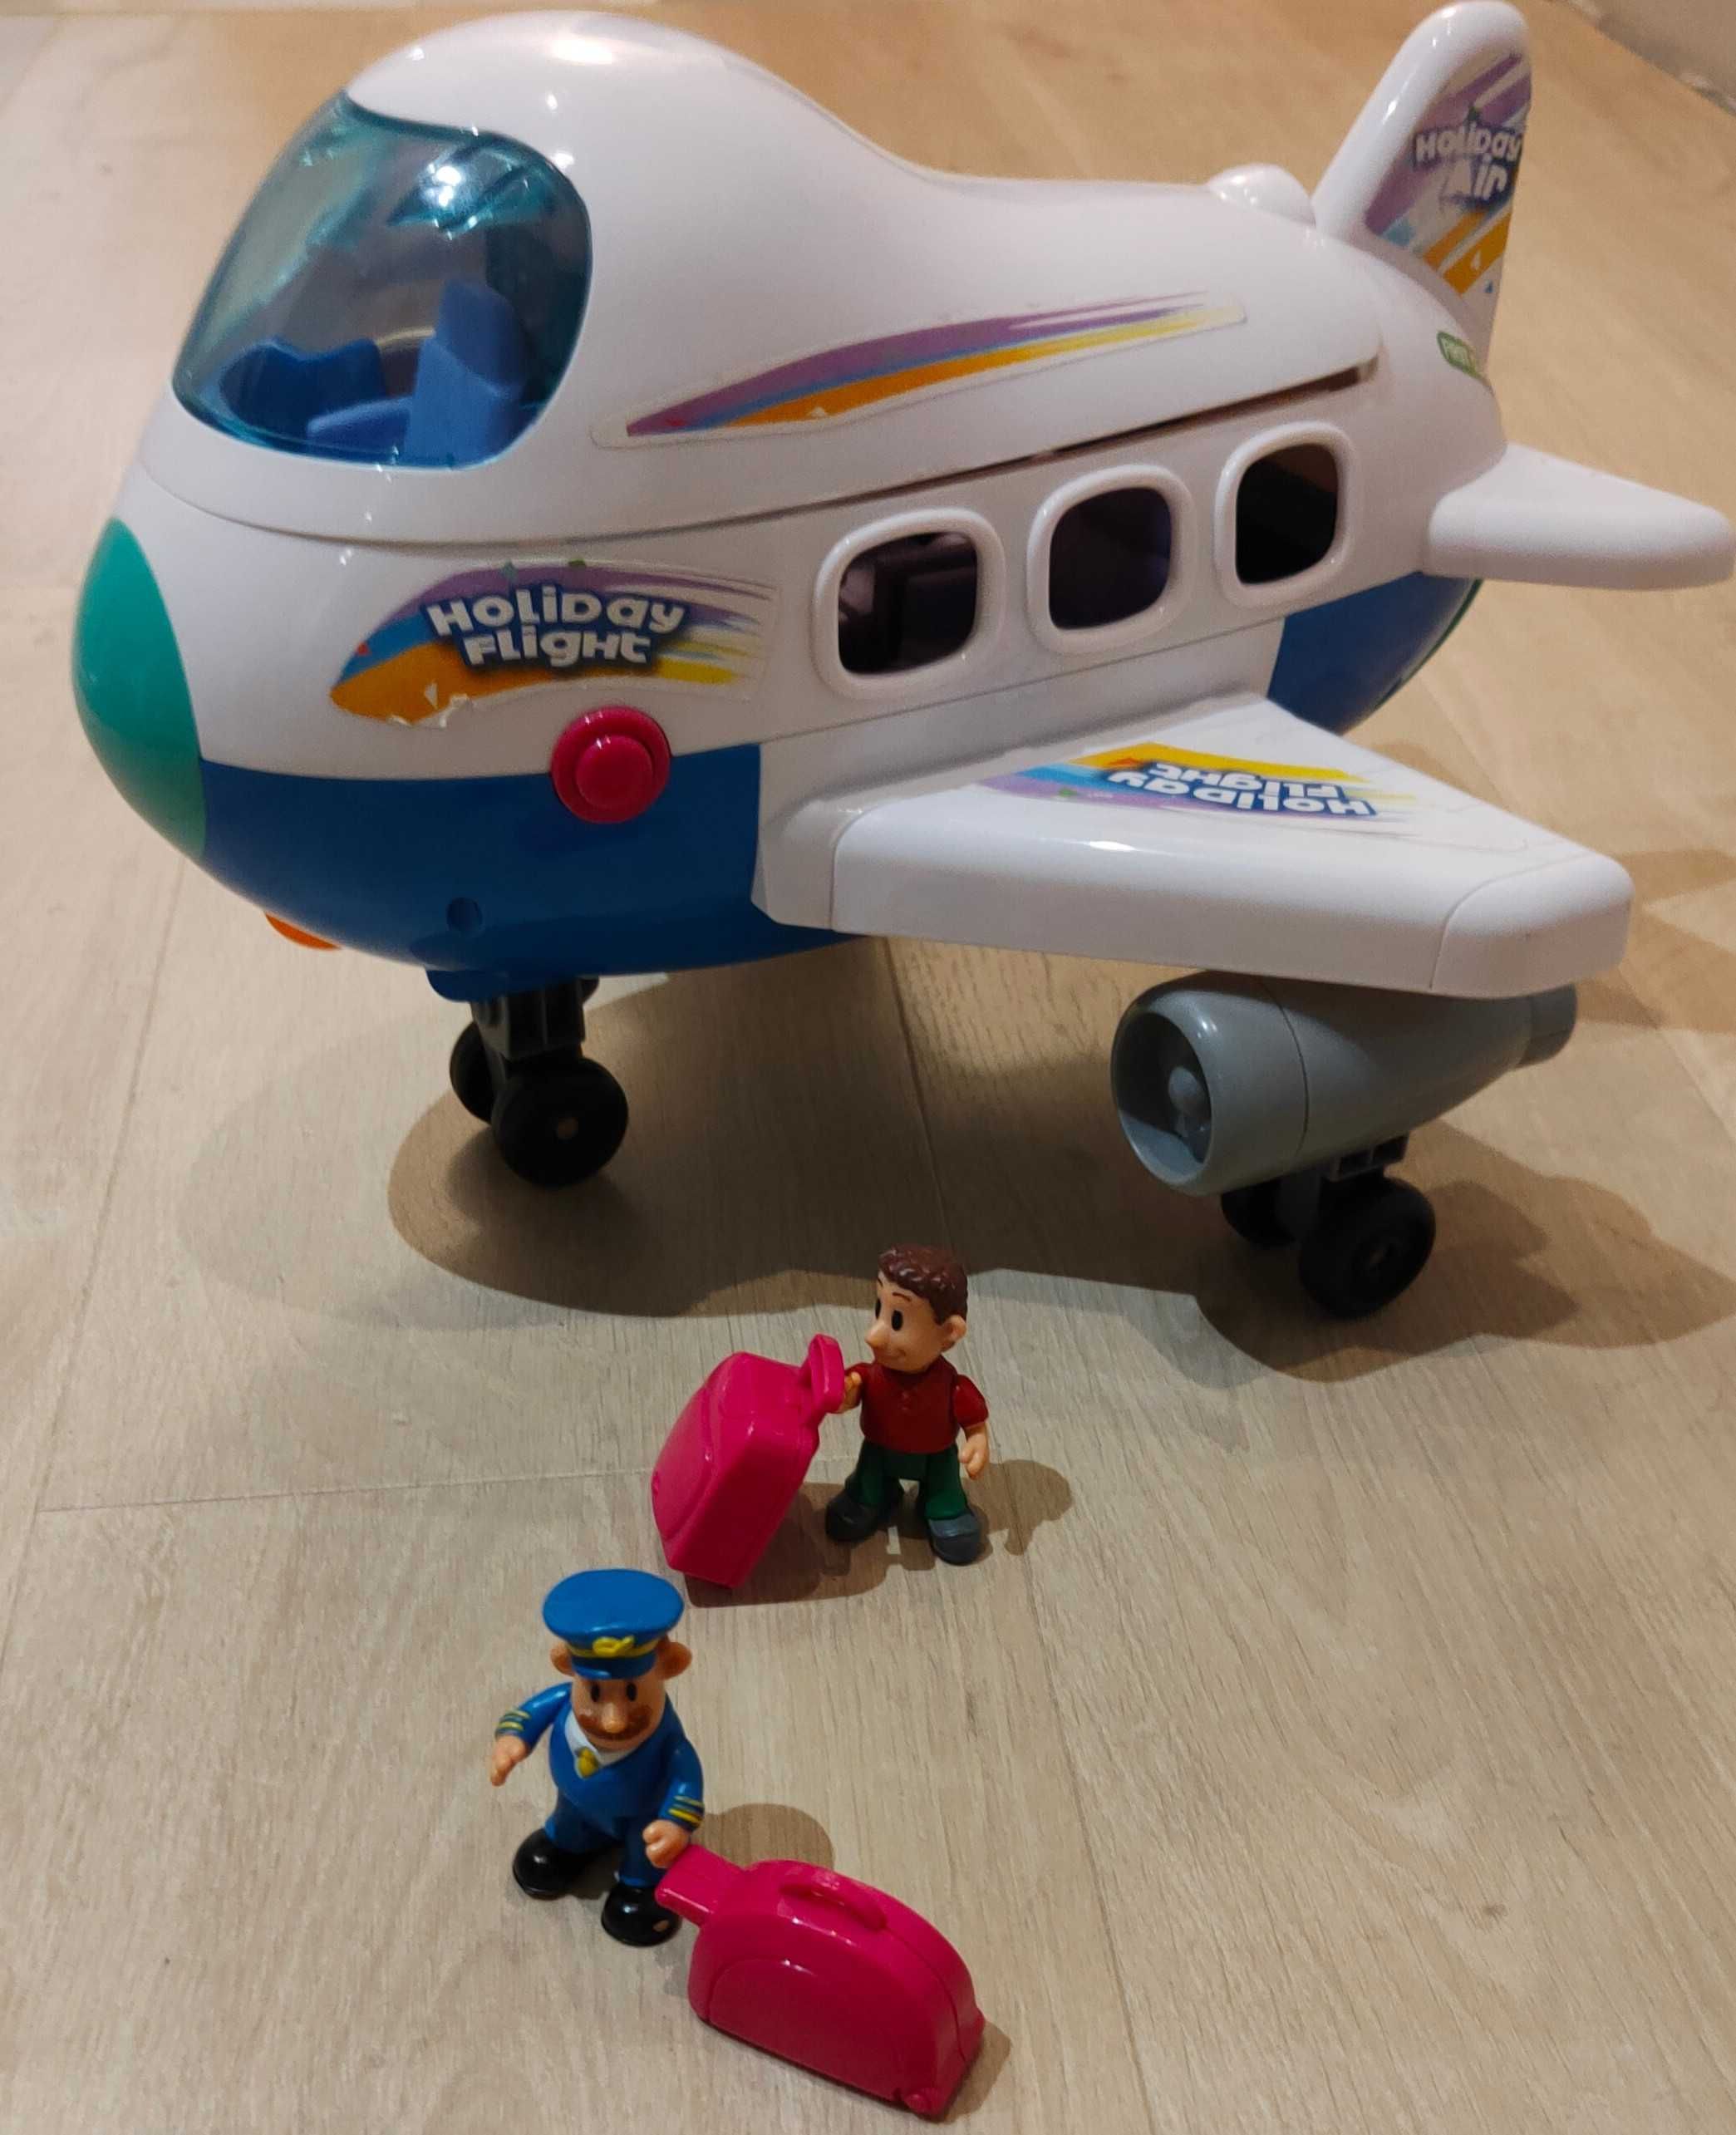 HOLIDAY FLIGHT Samolot Pasażerski + figurki. Wiek: 2+